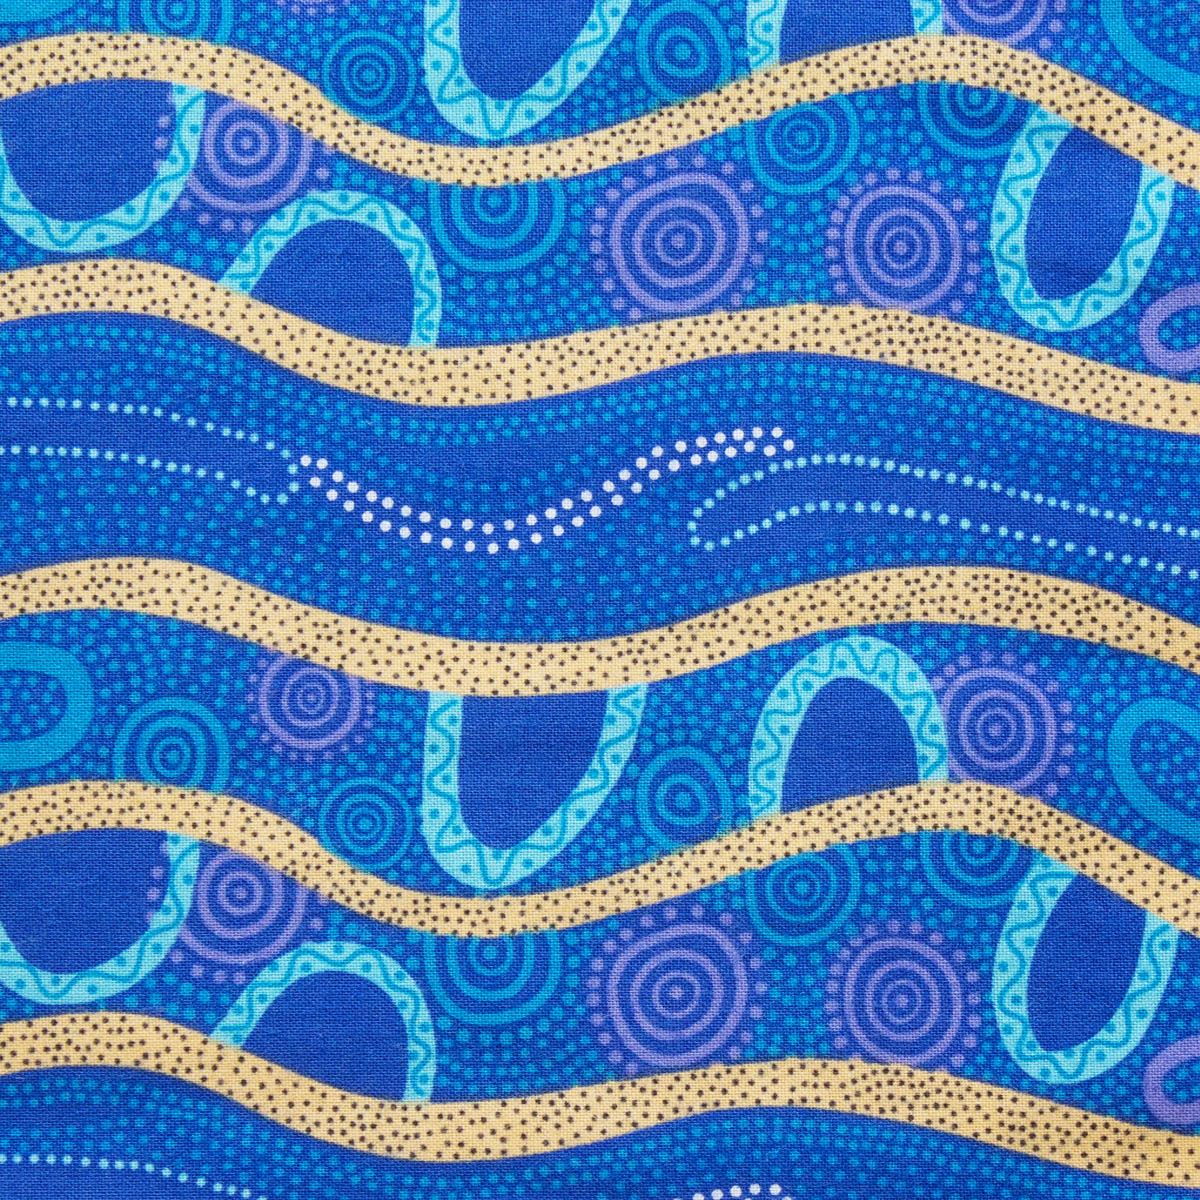 GATHERING BY THE RIVER BLUE by Australian Aboriginal Artist BARBARA EGAN